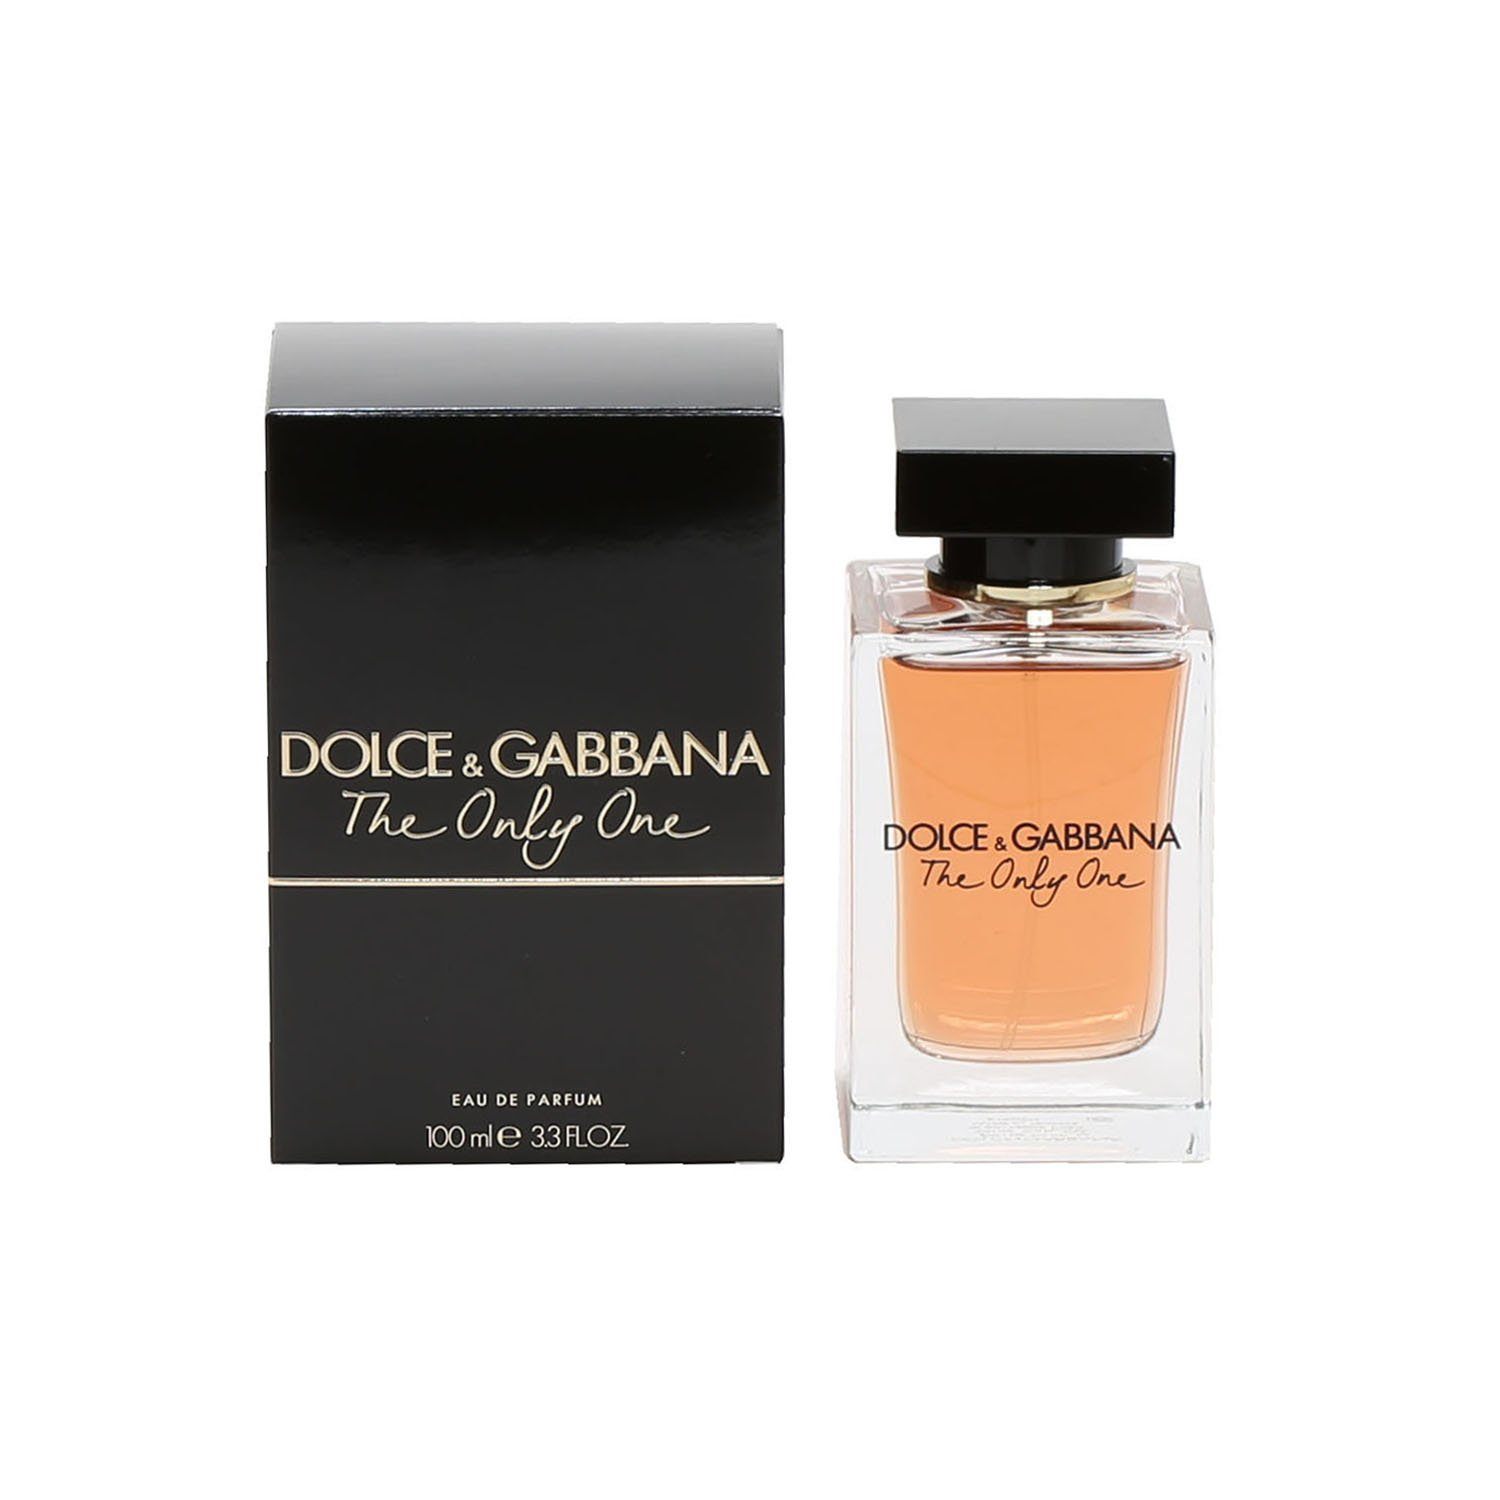 Perfume - DOLCE & GABBANA THE ONLY ONE FOR WOMEN - EAU DE PARFUM SPRAY, 3.4 OZ